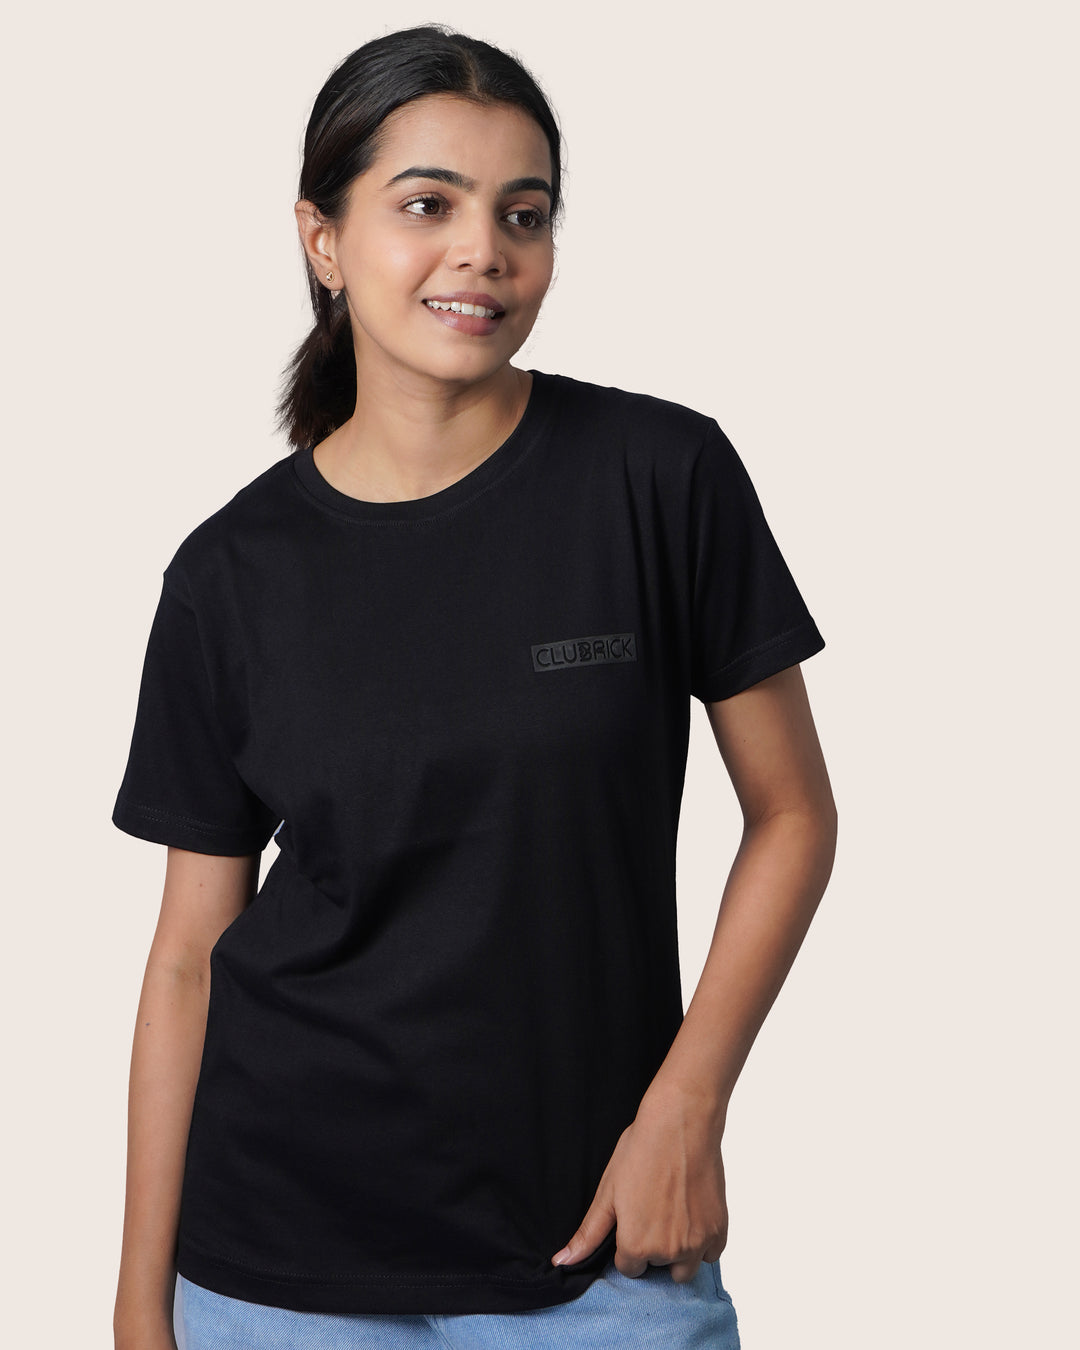 Feathersoft Home Comfort Women's Crewneck T-Shirt: Coal Black